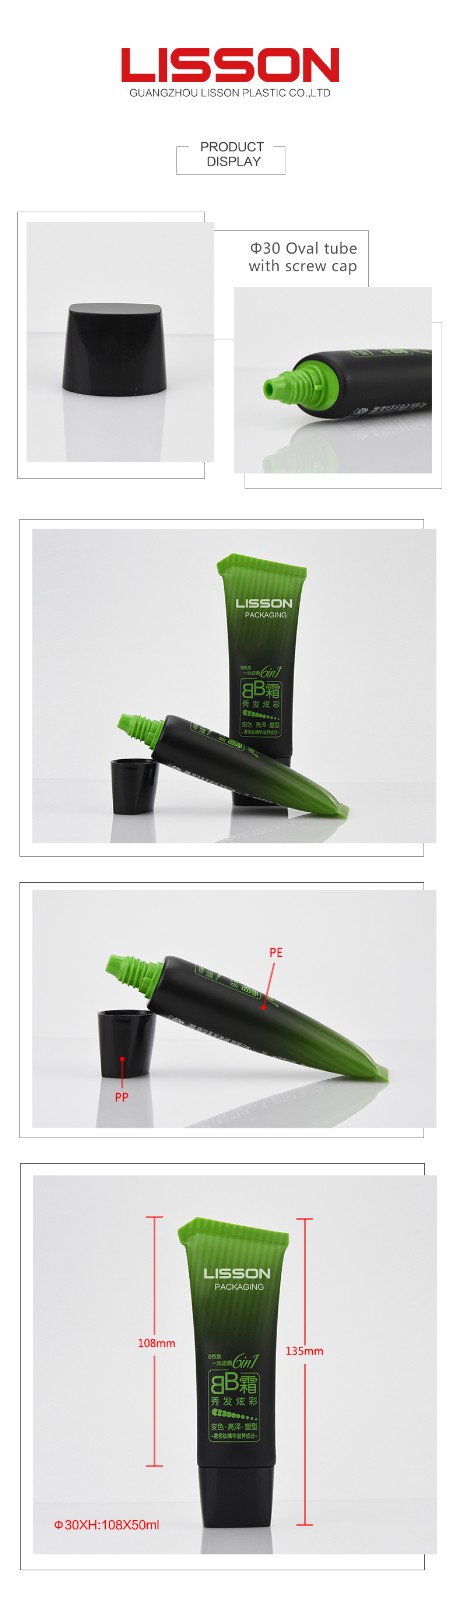 Lisson free sample empty mascara tube for toiletry